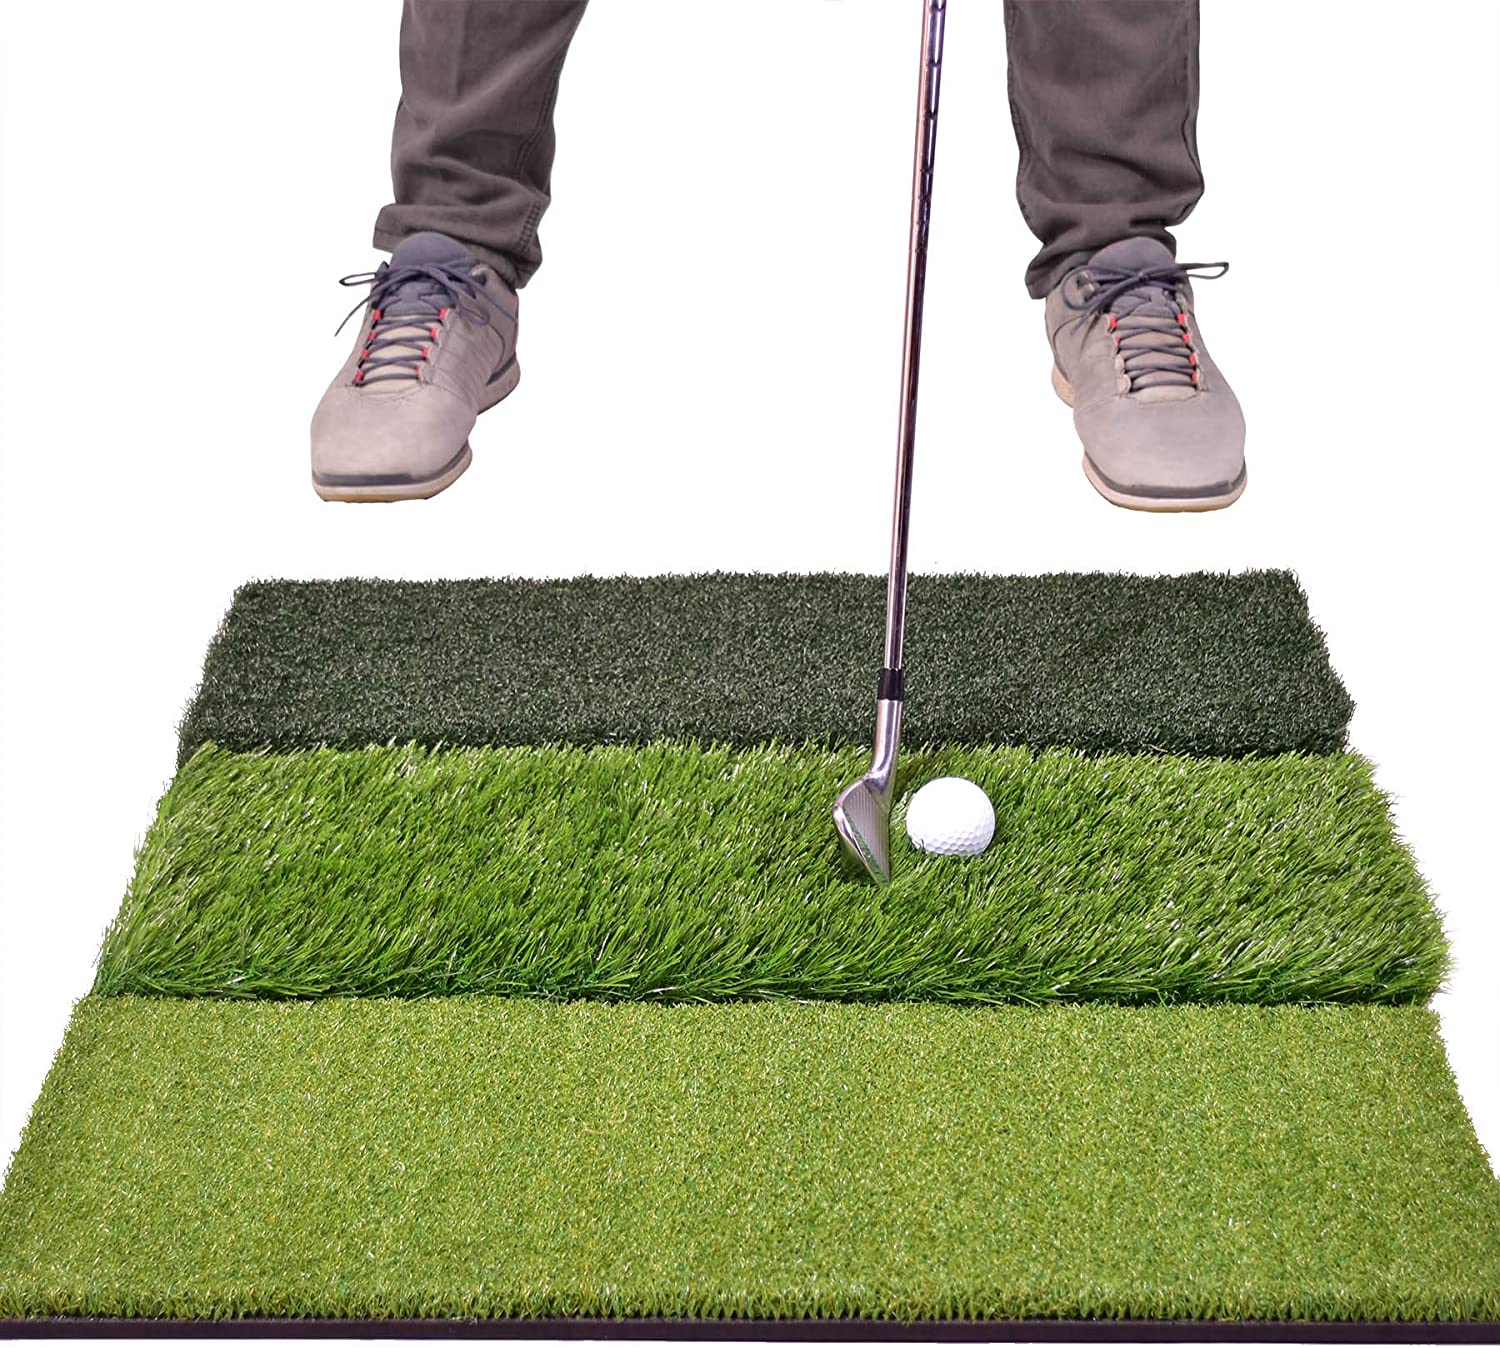 24" x 24" GoSports Tri-Turf XL Golf Practice Hitting Mat $43.22